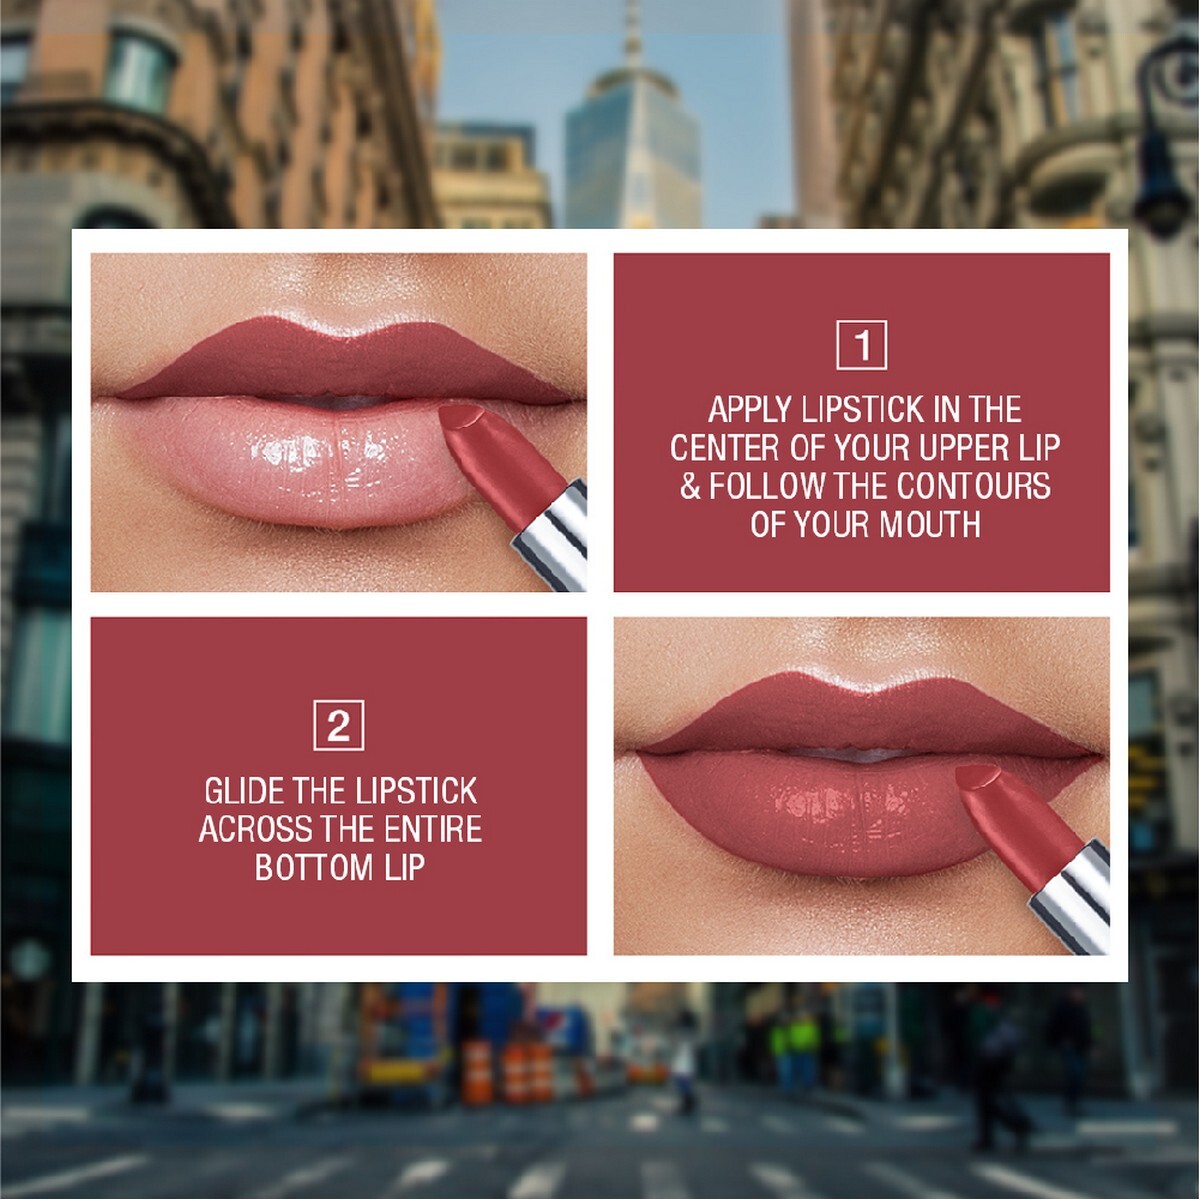 Maybelline New York Color Sensational Creamy Matte Lipstick, 696 Burgundy Blush, 3.9g